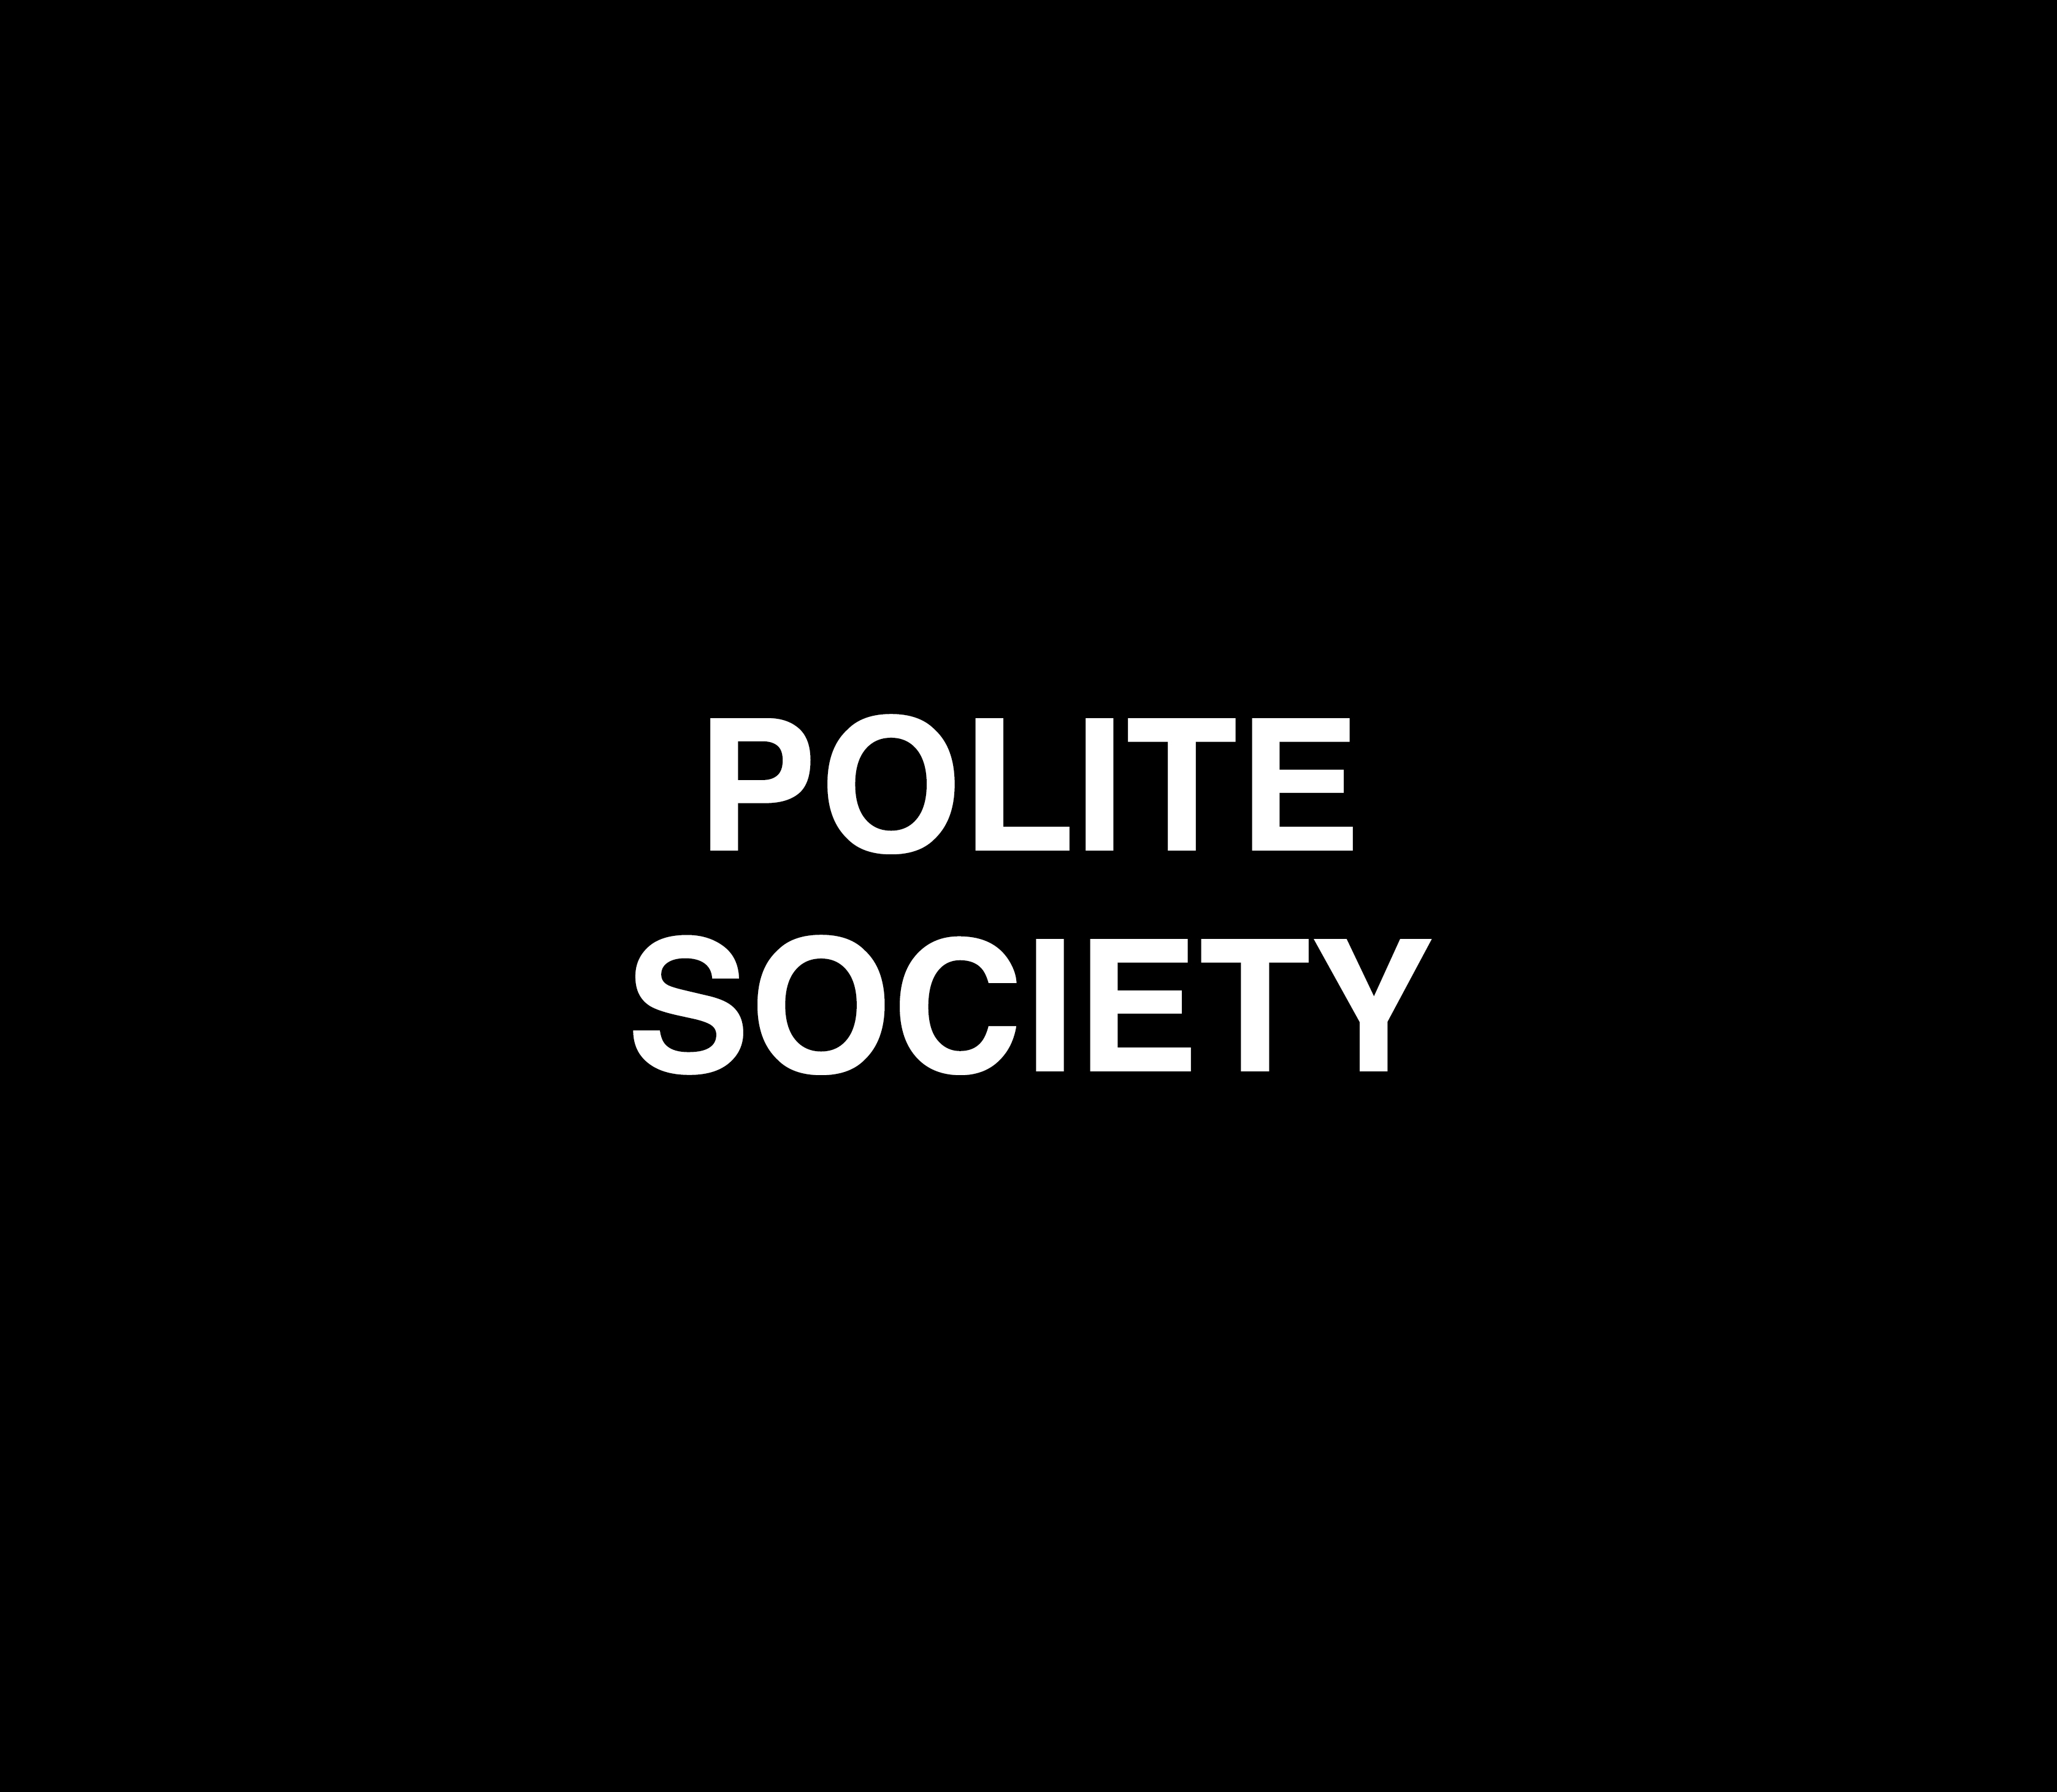 POLITE SOCIETY